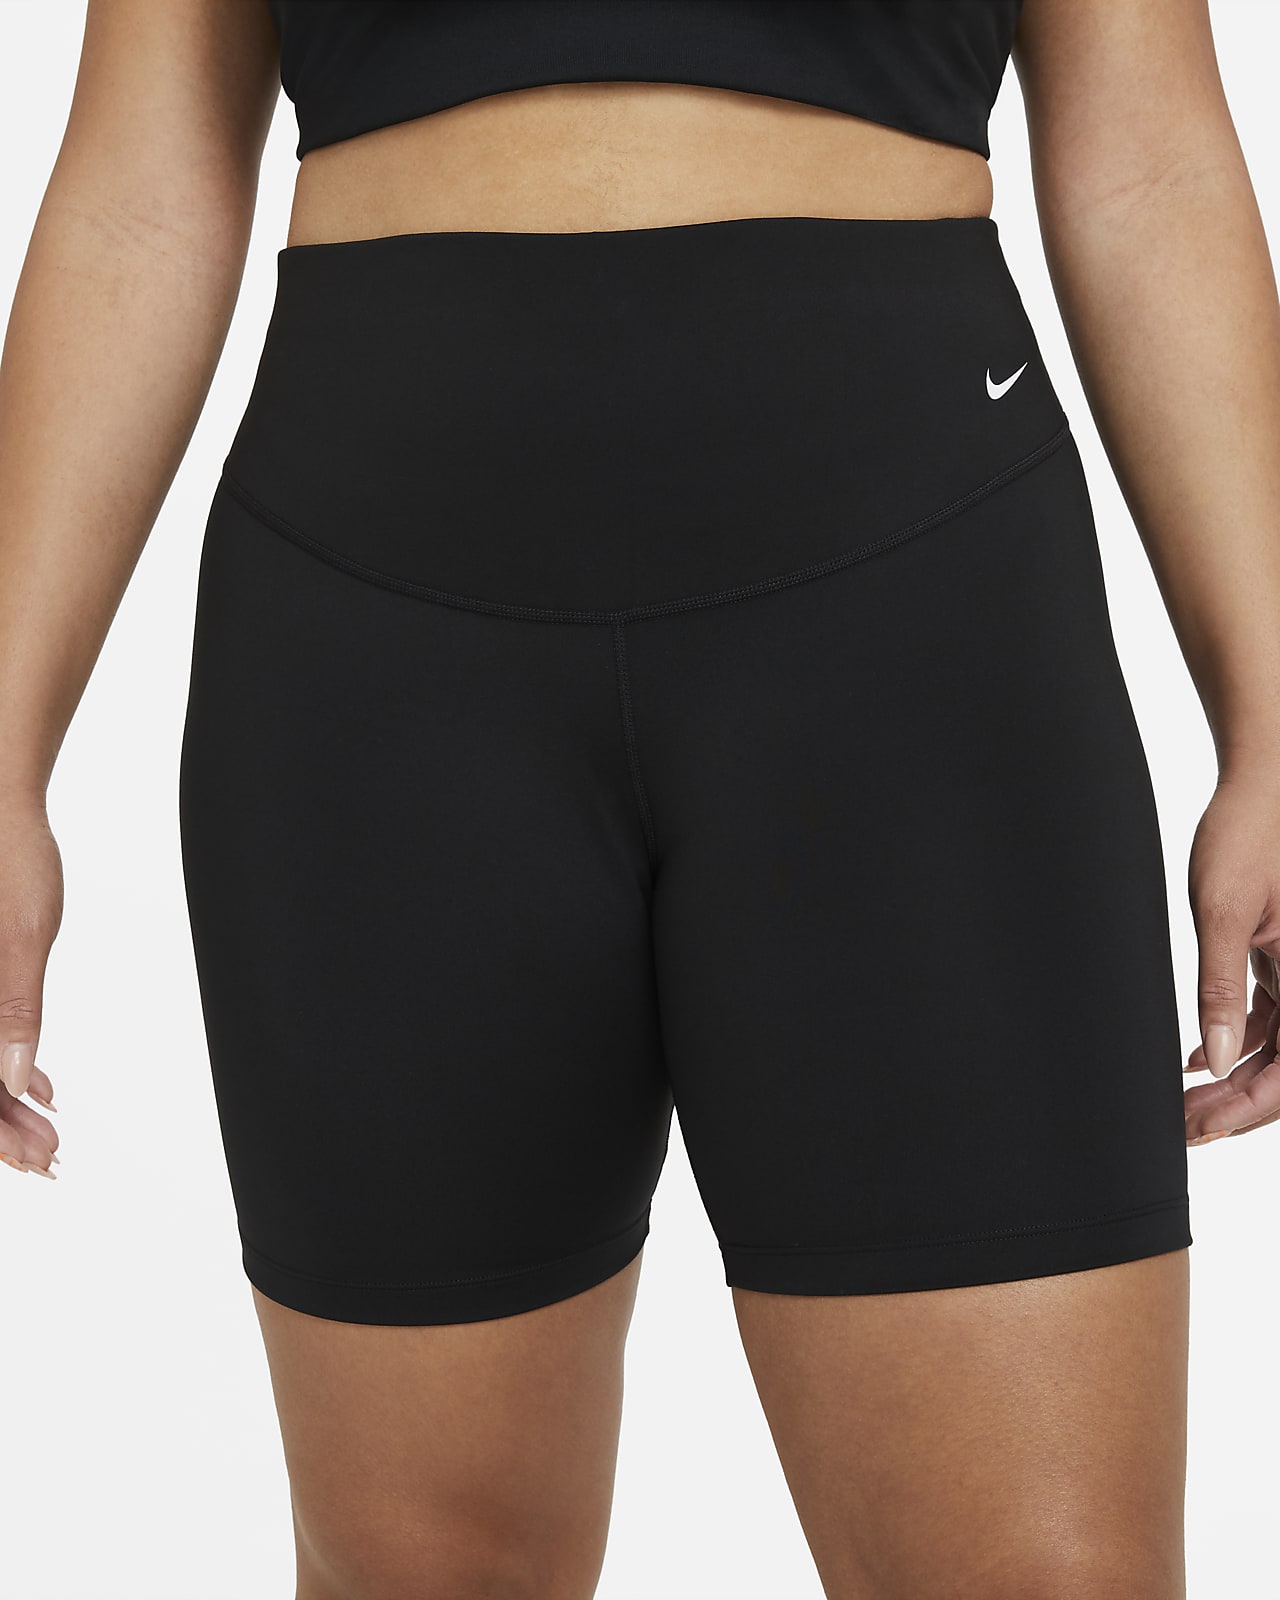 Nike One-cykelshorts mellemhøj talje (18 cm) kvinder (Plus size). DK